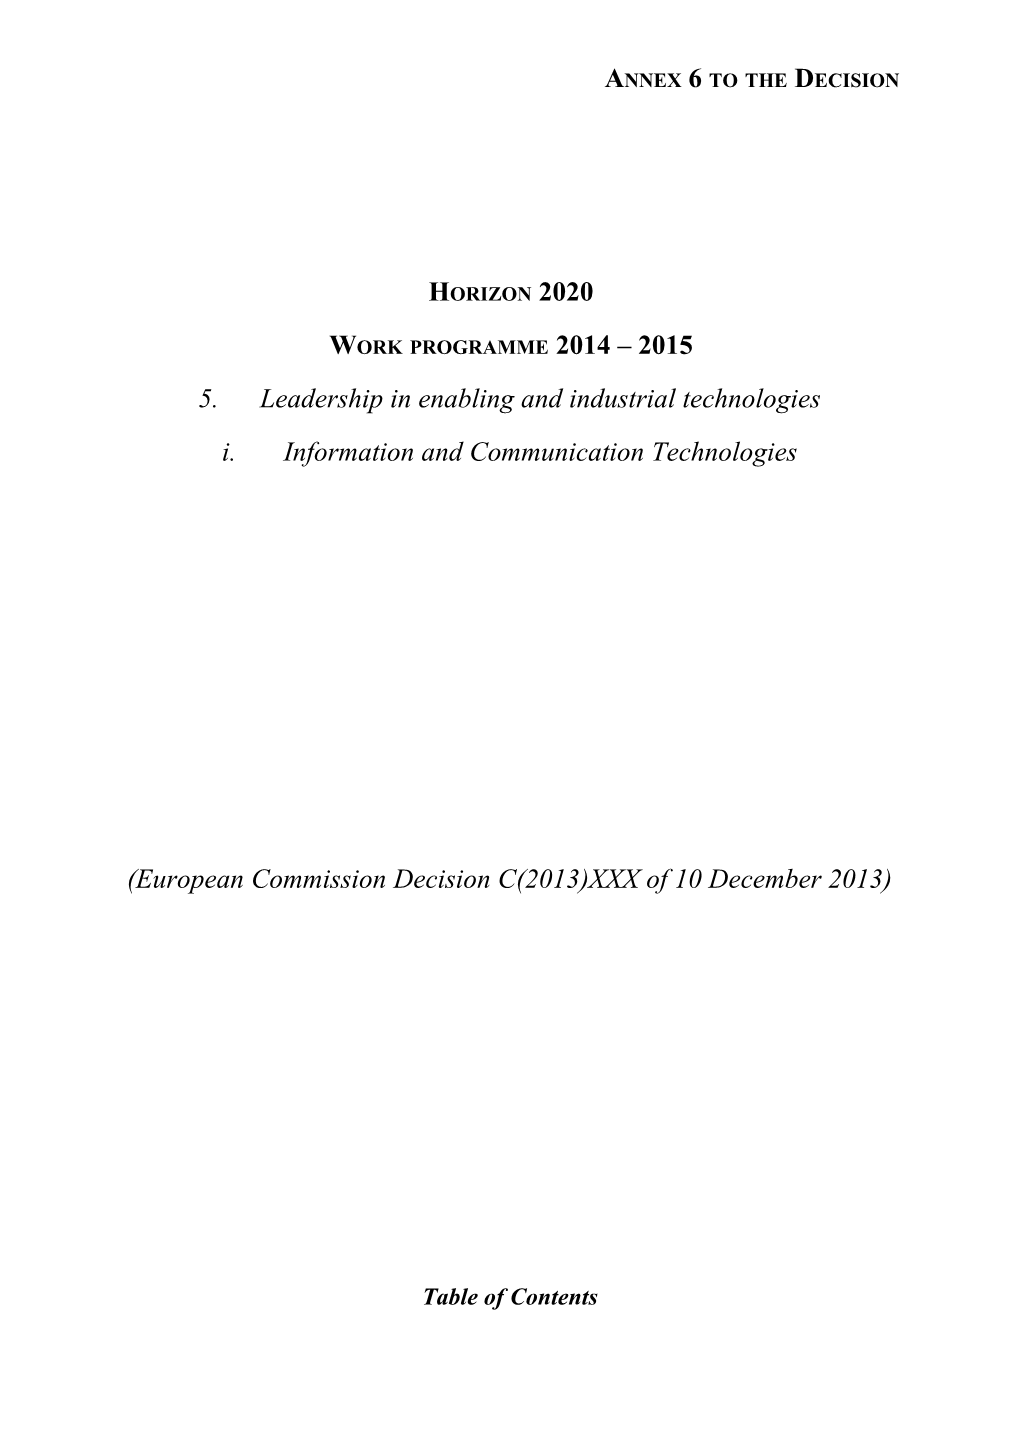 Horizon 2020 Work Programme 2014-2015